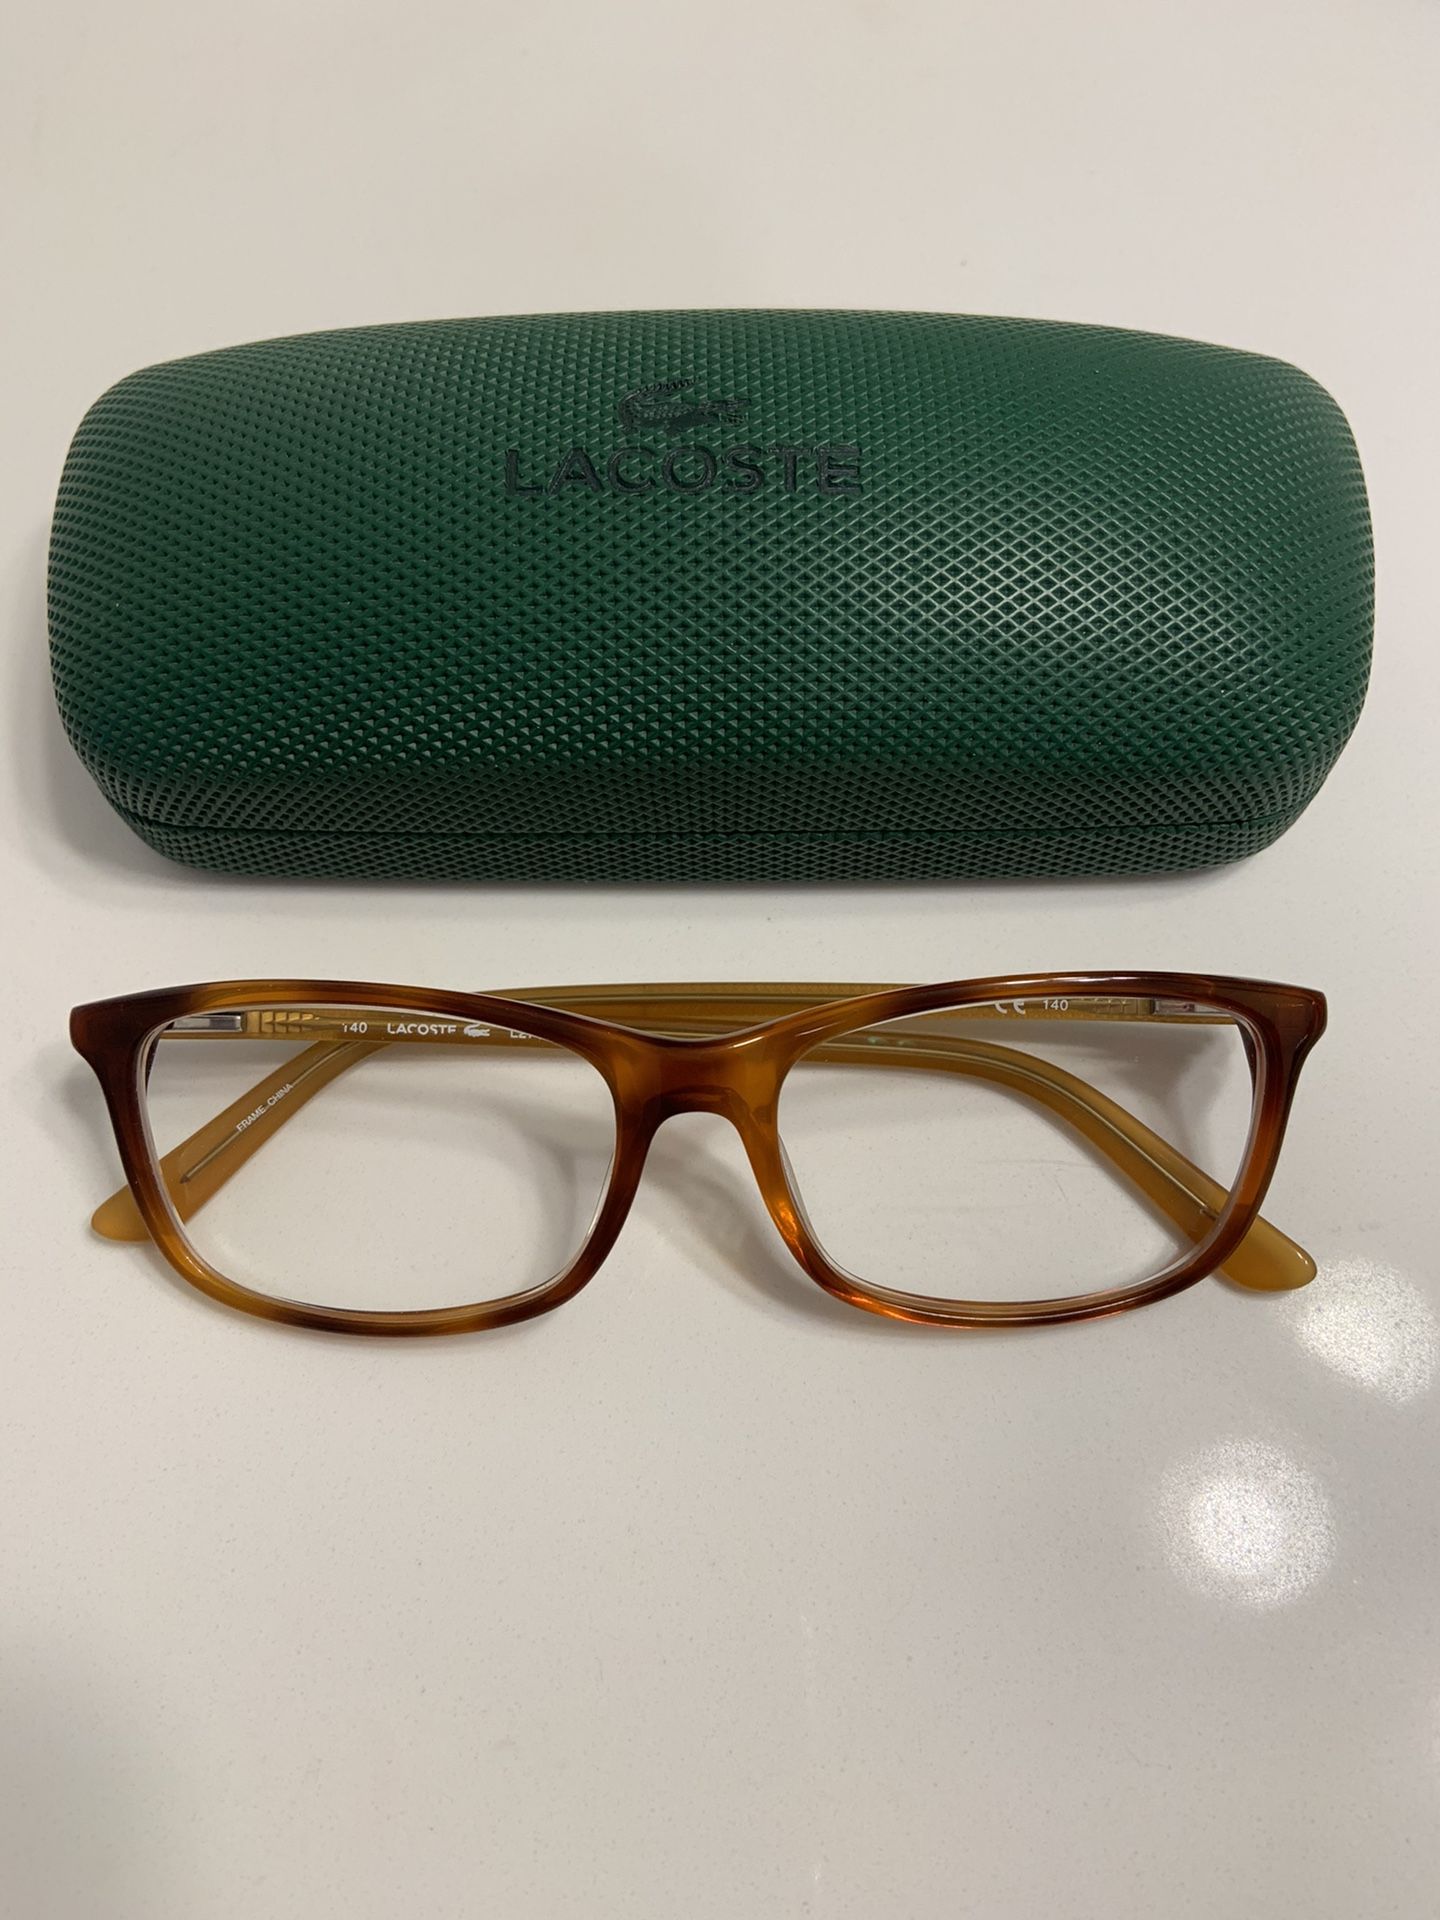 Lacoste eyeglasses frame